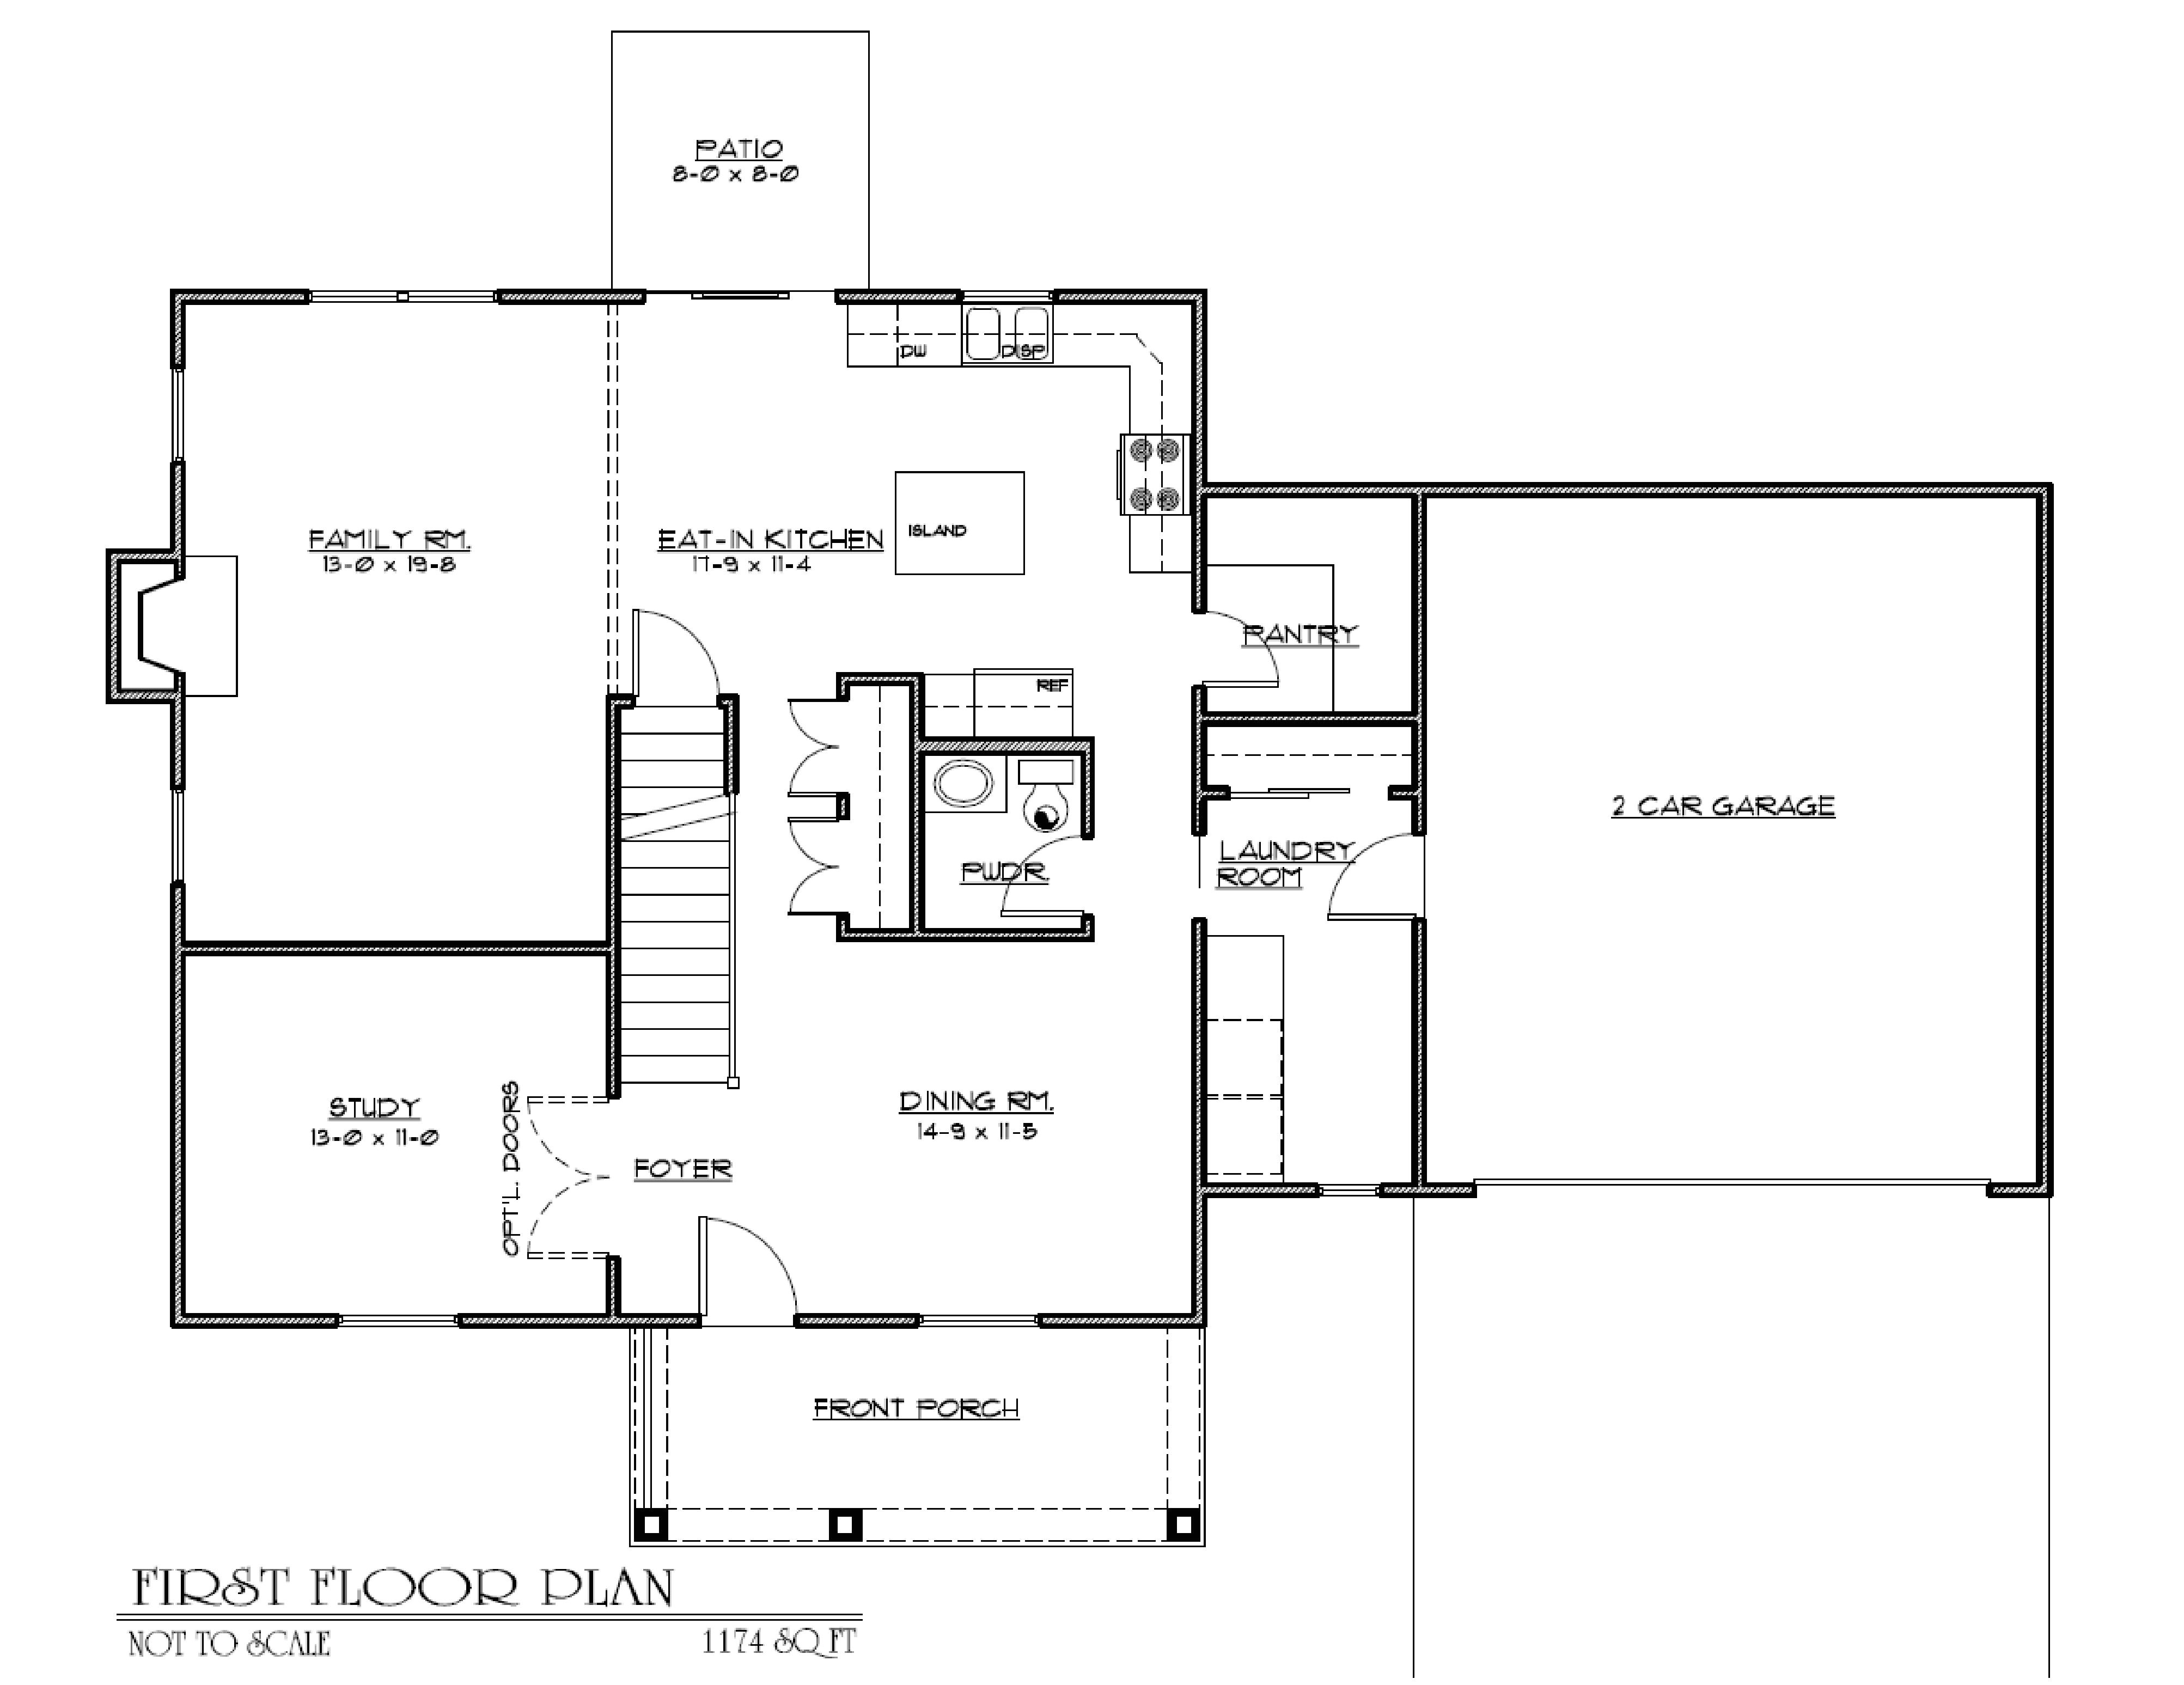 dream bedroom creator house plans custom floor plans free jim walter homes floor mens bedrooms decorating ideas